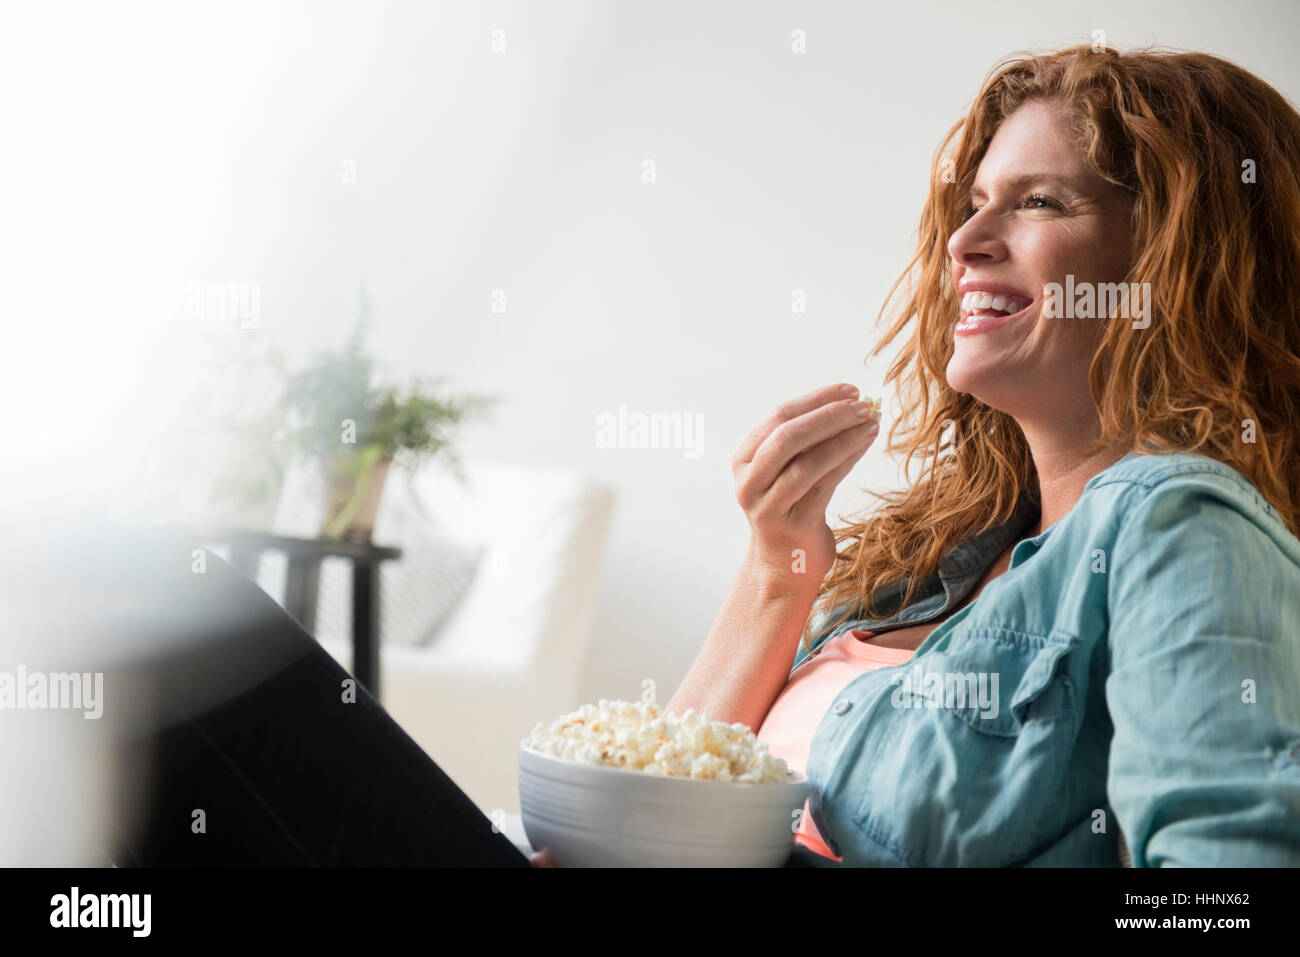 Laughing Caucasian woman eating bowl of popcorn Stock Photo